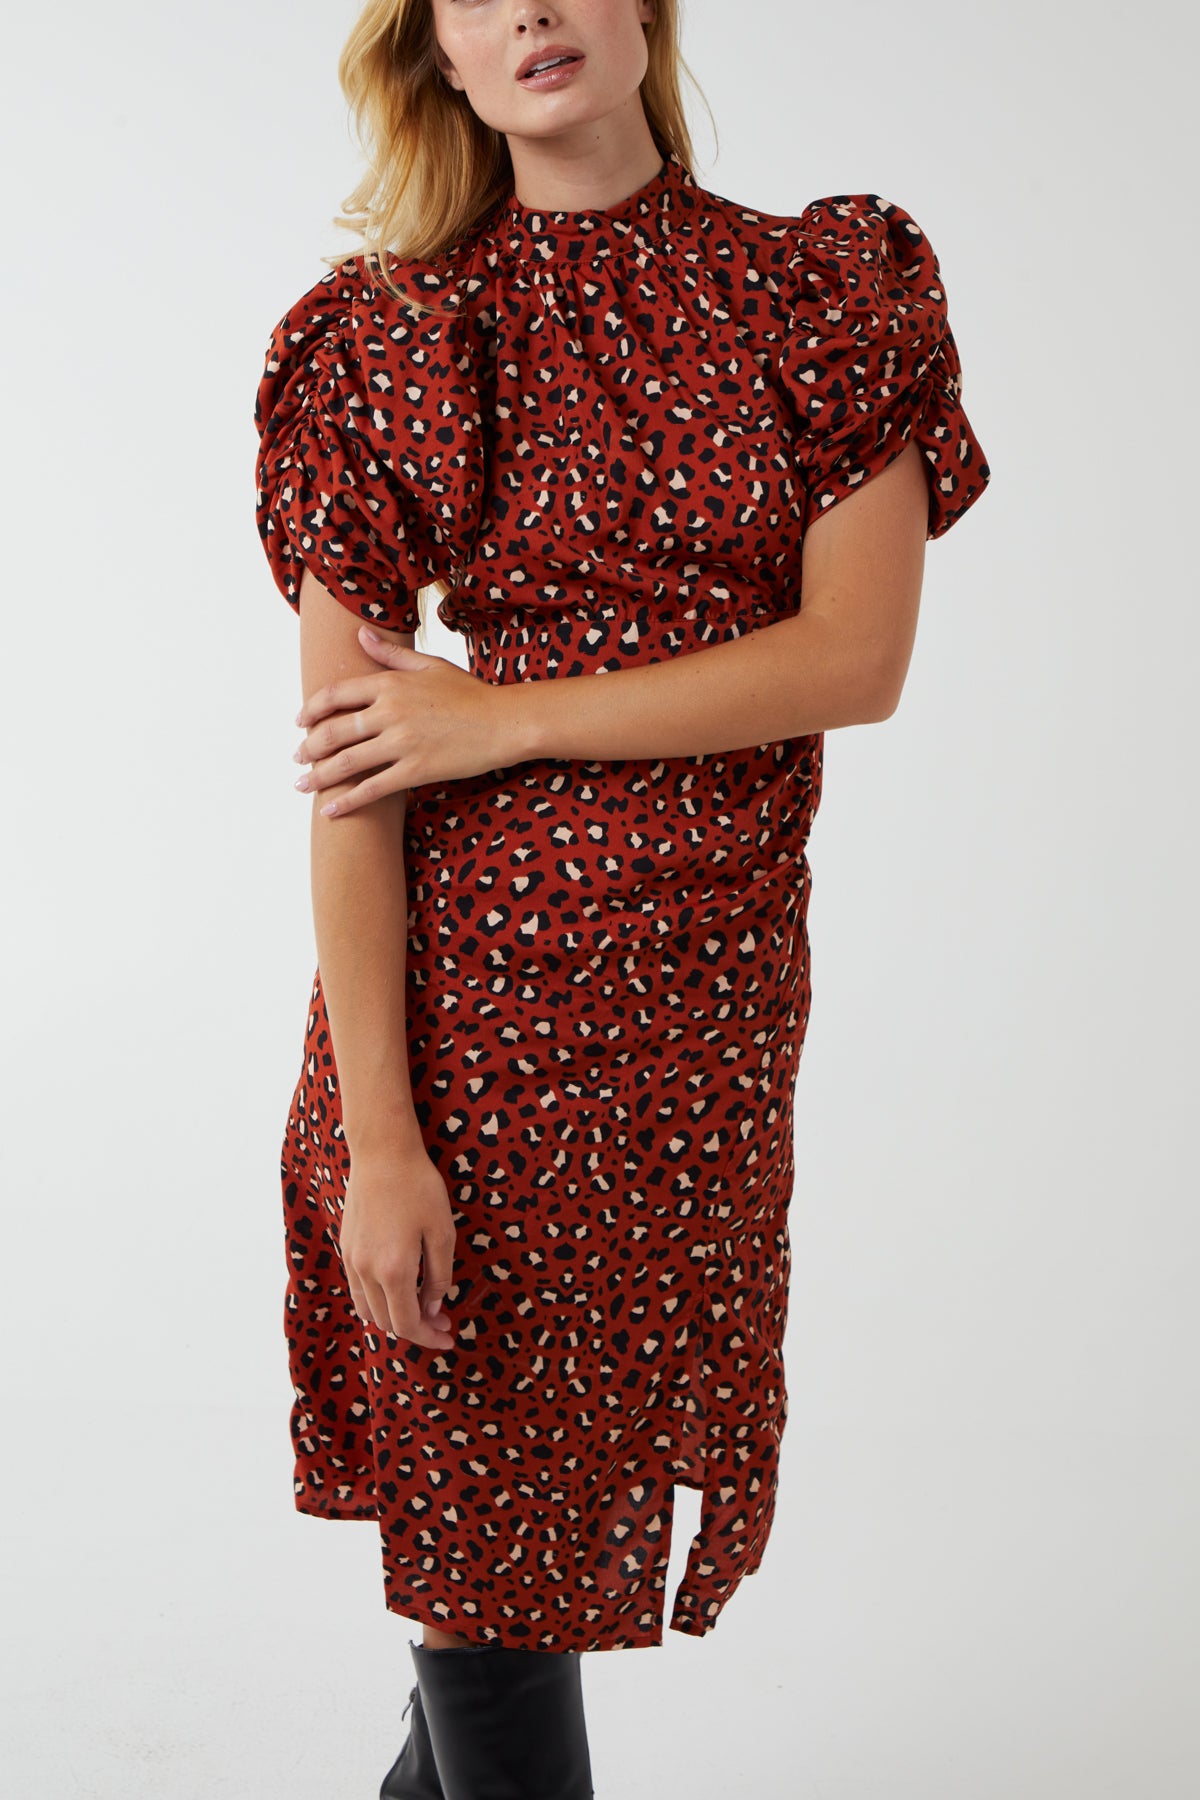 Leopard Print Puff Sleeve Ruched Midi Dress